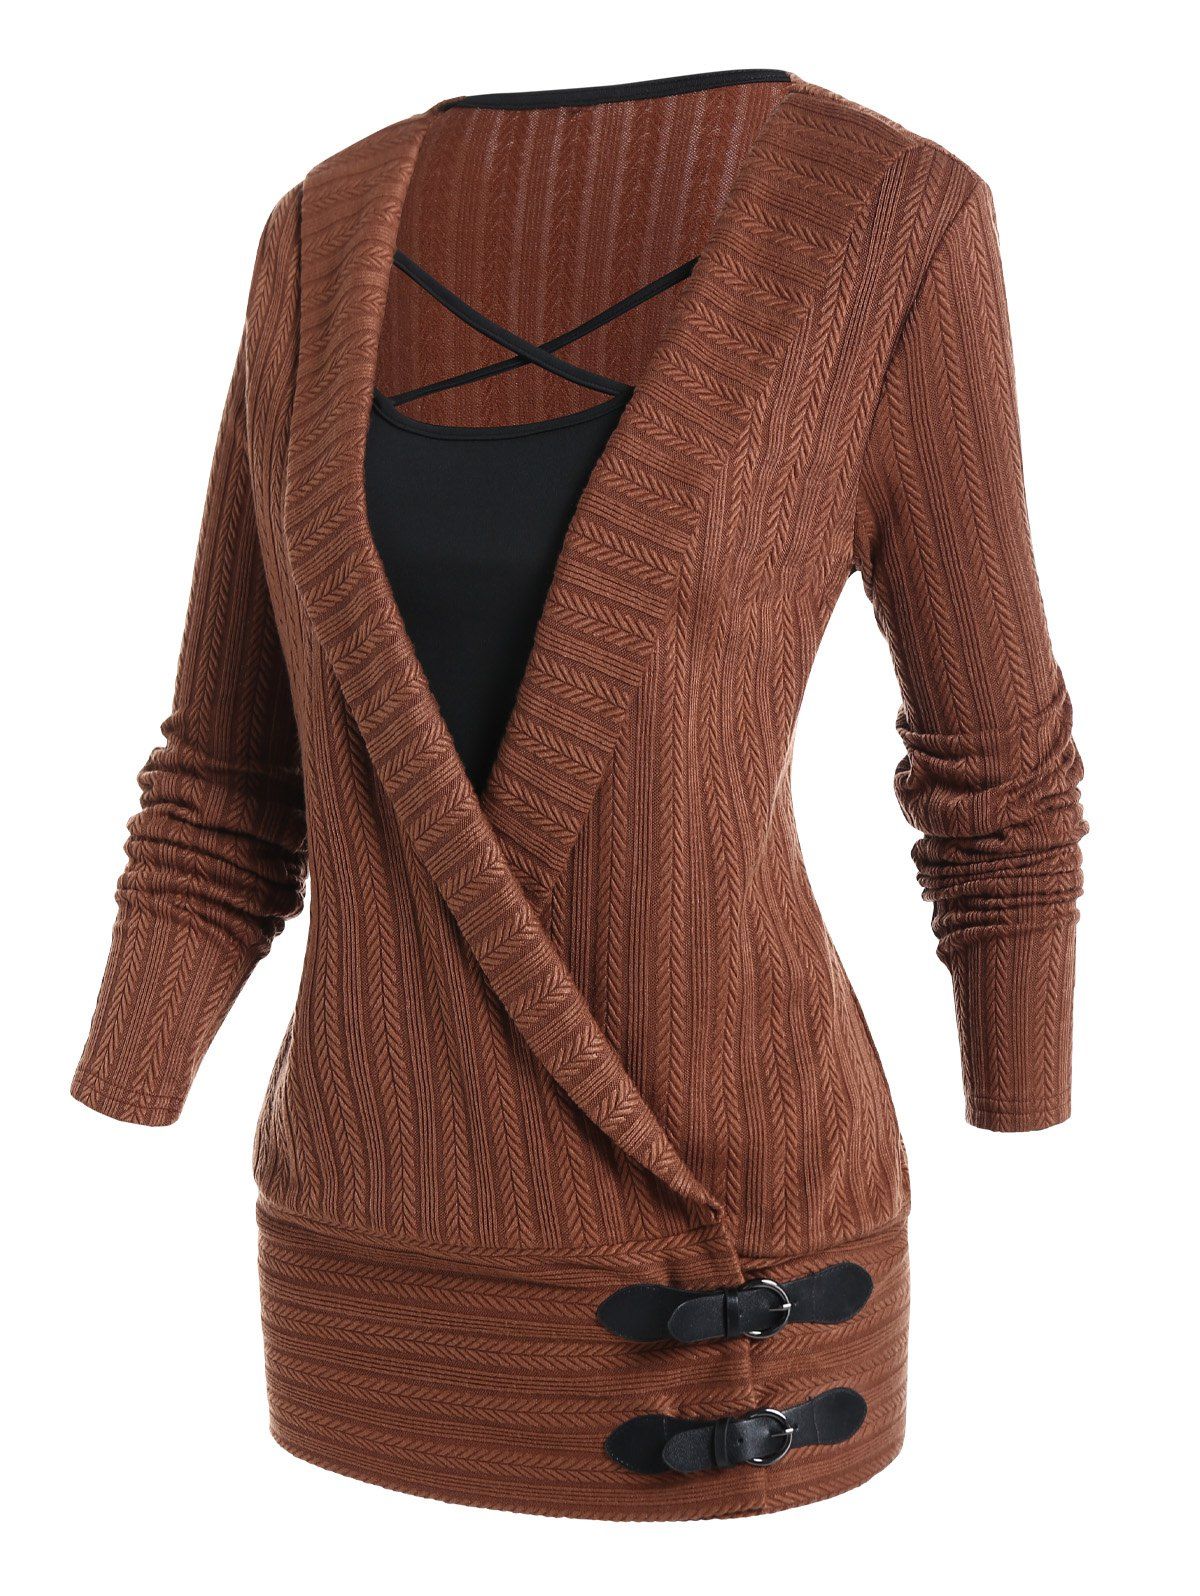 Stripe Leaf Textured Knit Faux Twinset Top Crisscross Buckles Surplice Long Sleeve Knitted 2 In 1 Top - COFFEE XXL